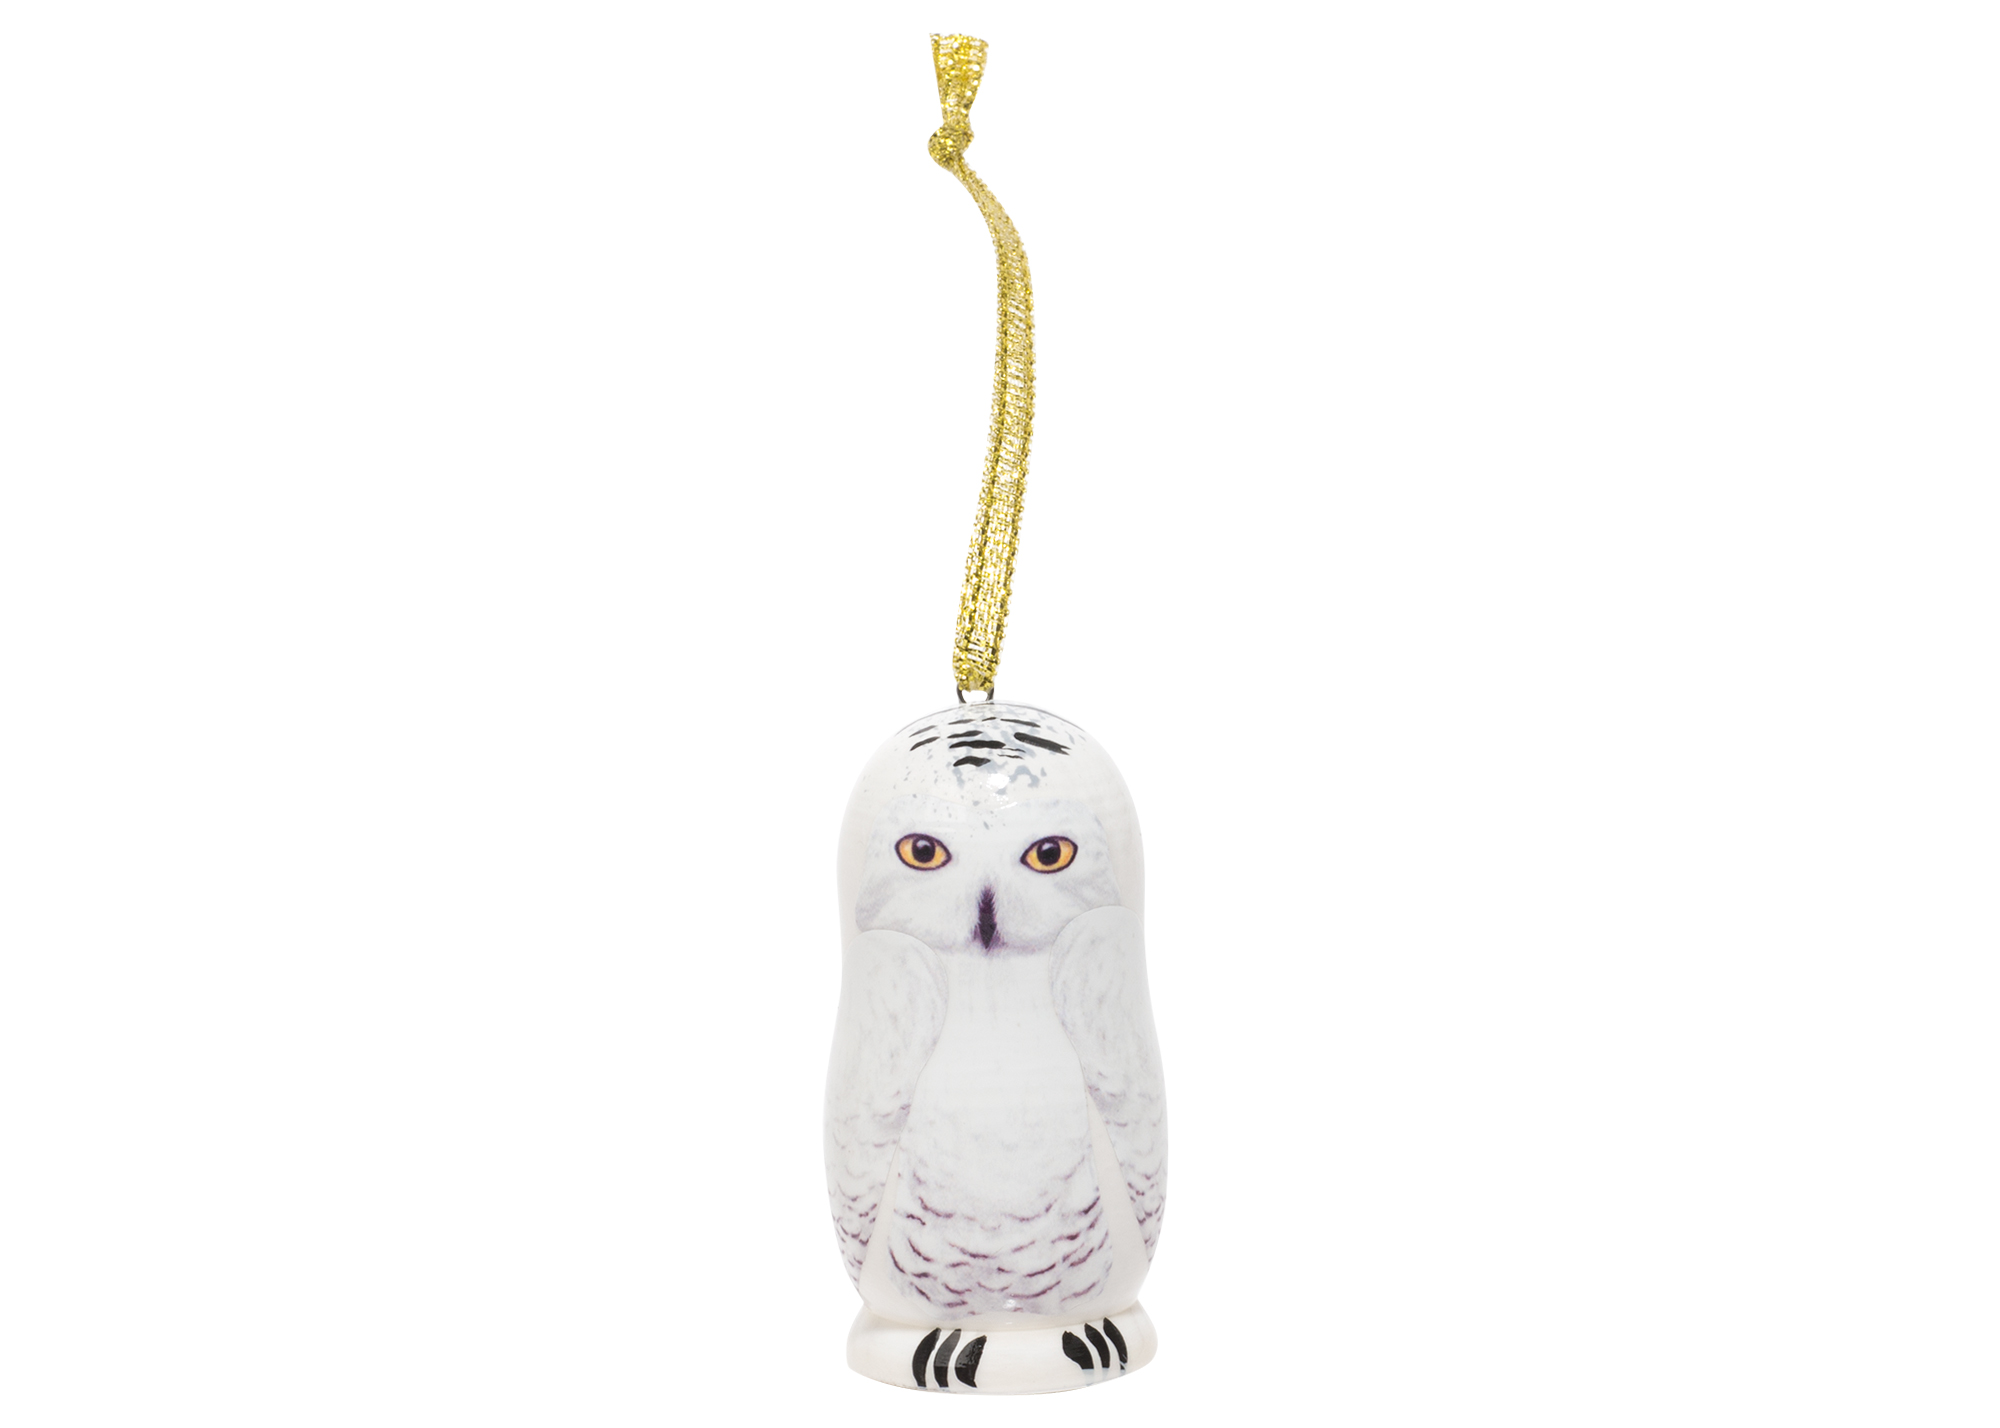 Buy Snowy Owl Ornament 2" at GoldenCockerel.com